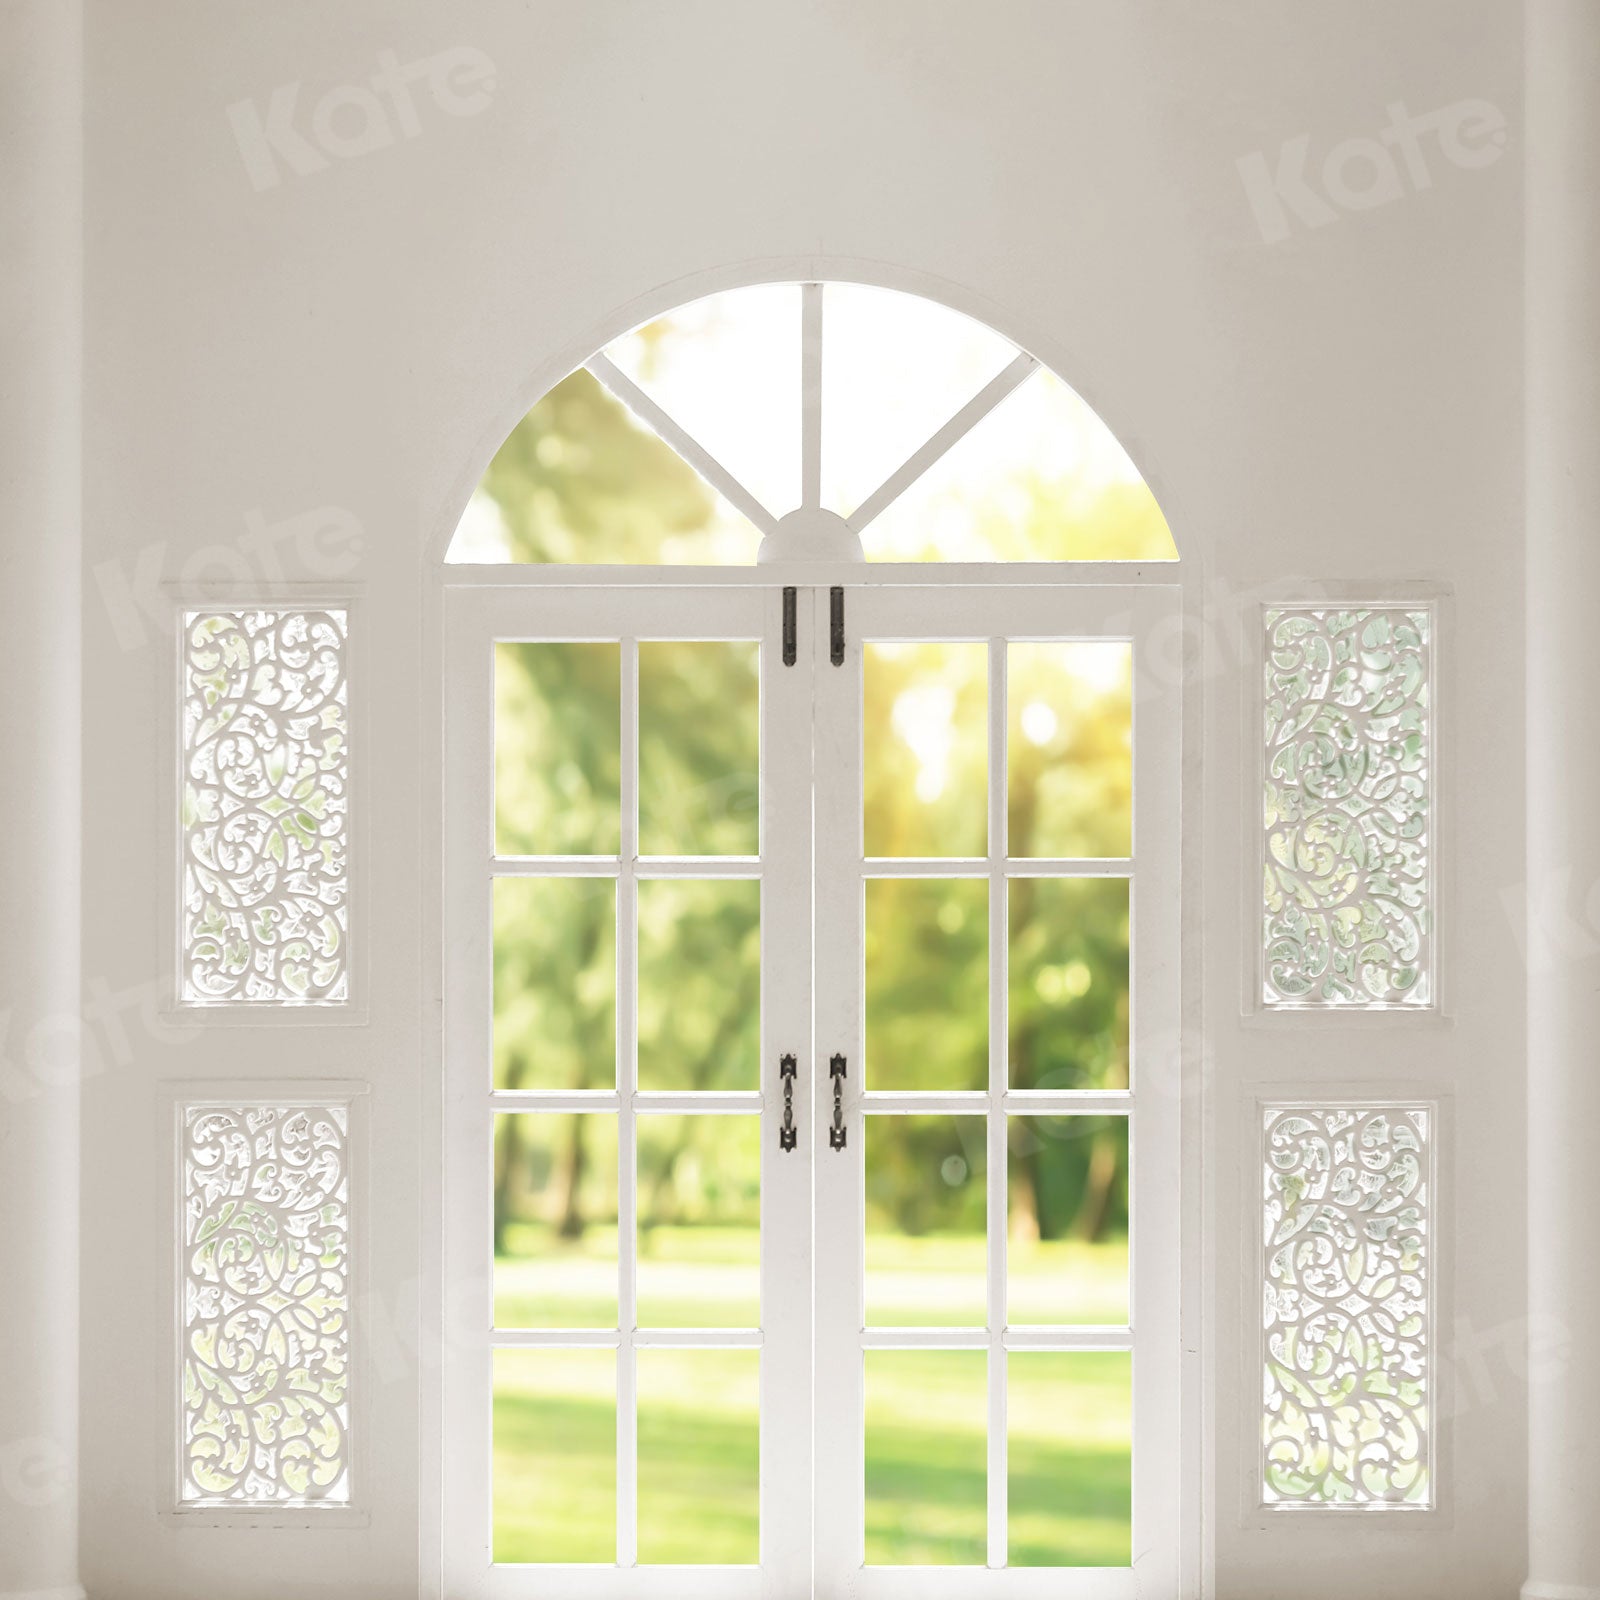 Kate Boken Spring Backdrop White Window Wedding for Photography